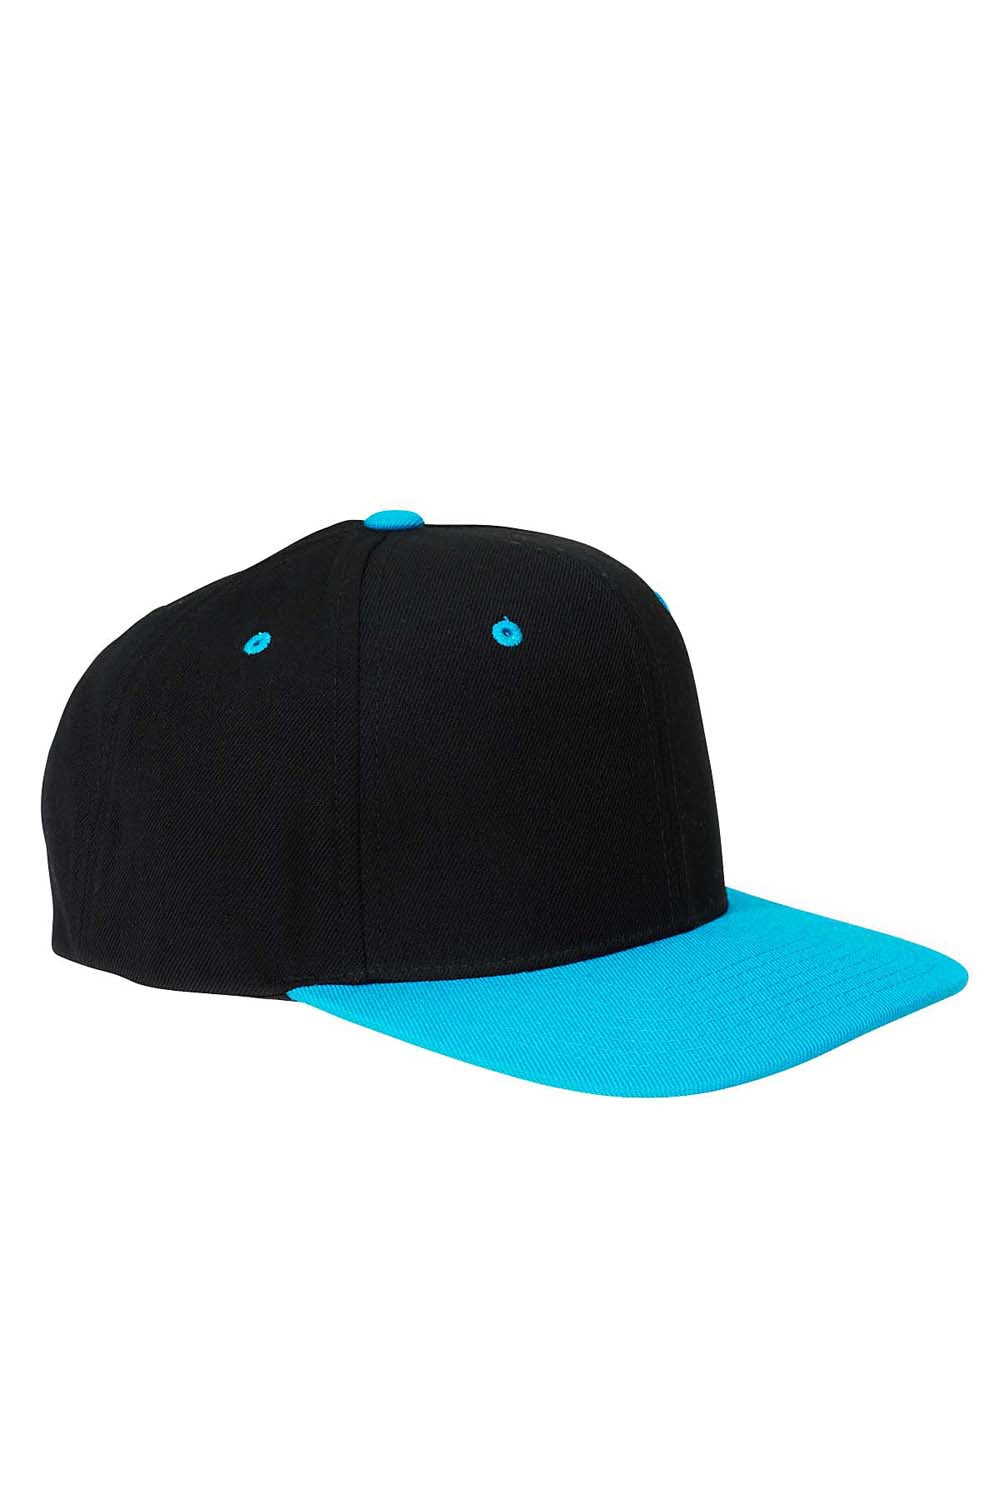 Yupoong 6089 Mens Adjustable Hat Black/Teal Green Front